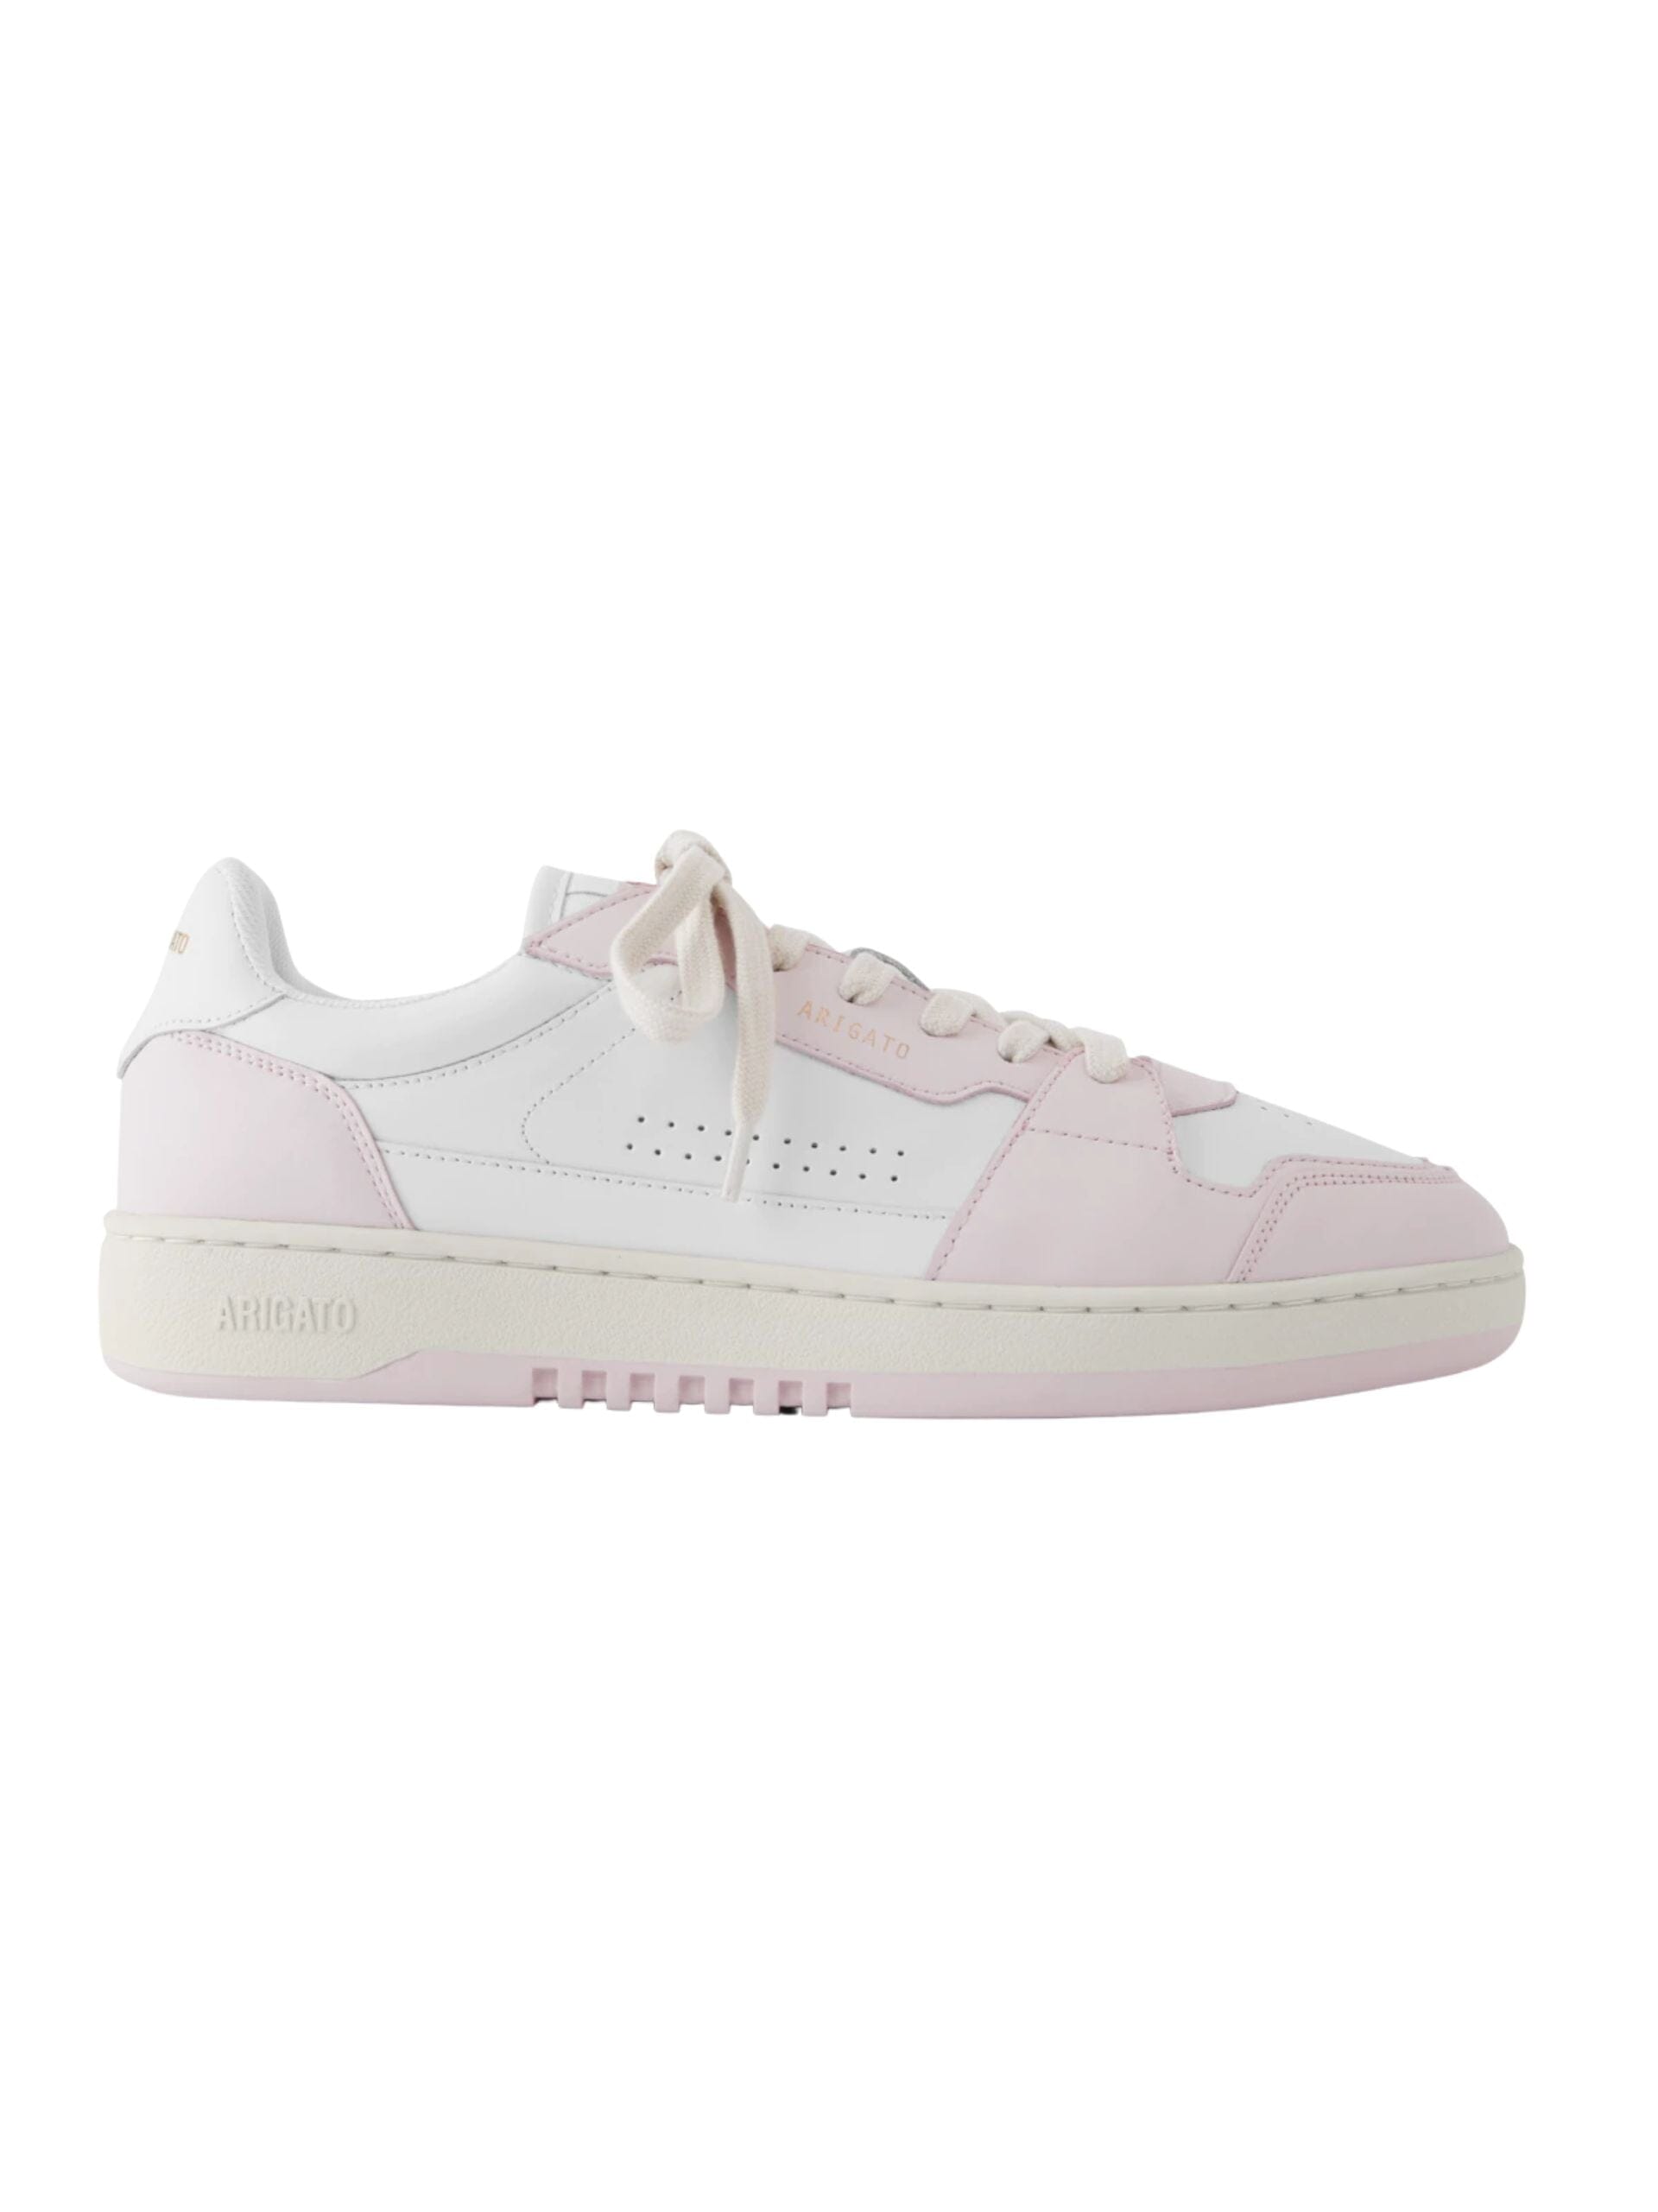 Dice Lo Sneaker / White & Pink Womens Axel Arigato 